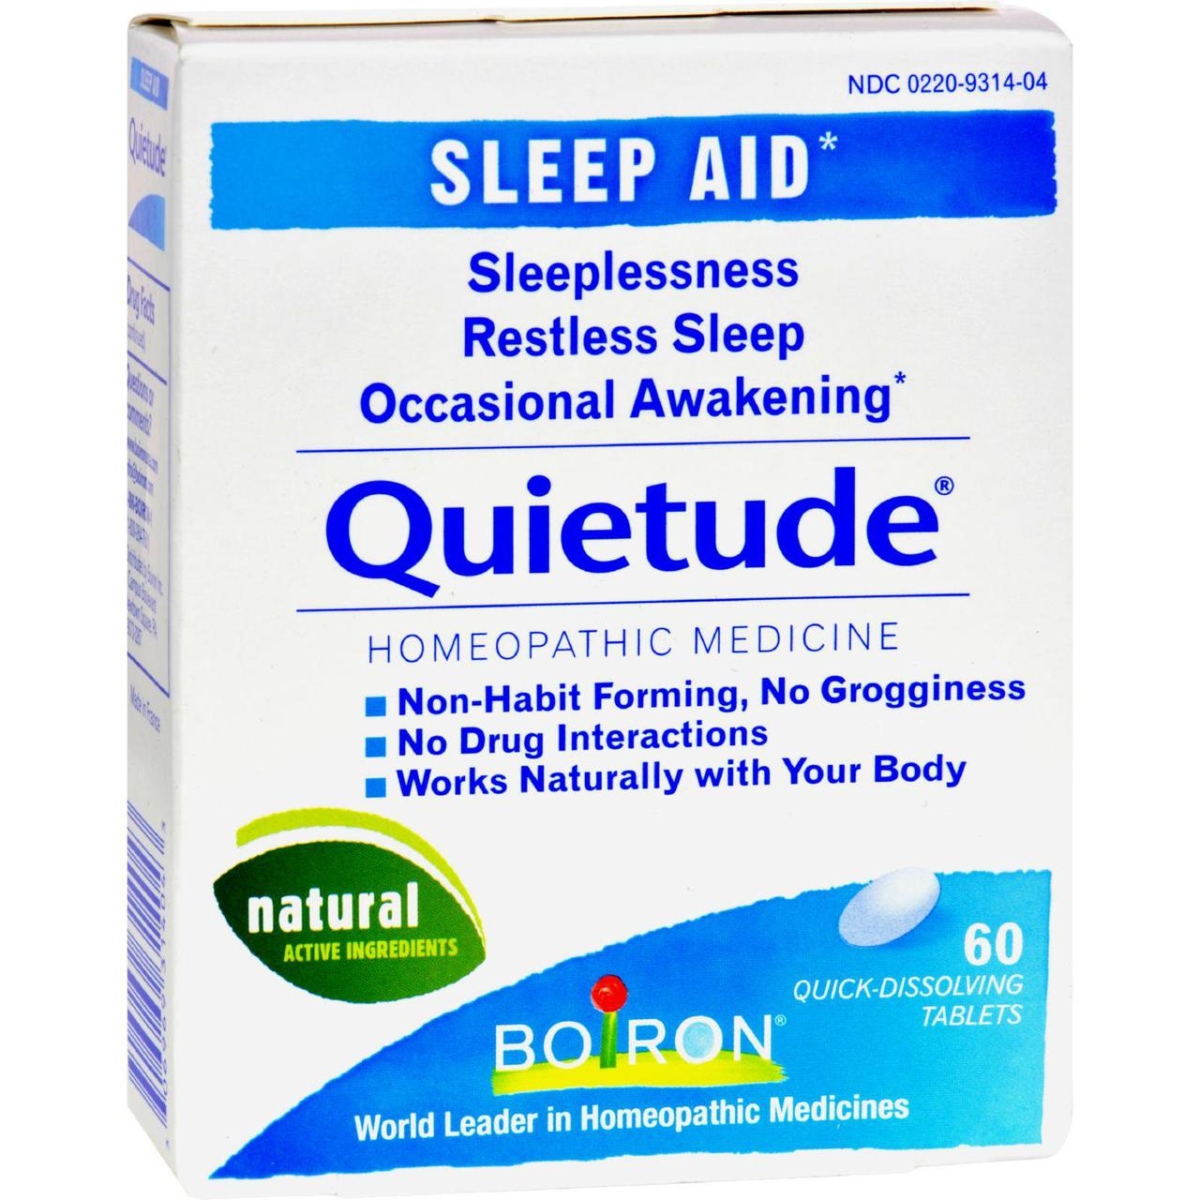 Hg1565456 Quietude Tablets - Restless Sleep, 60 Tablets